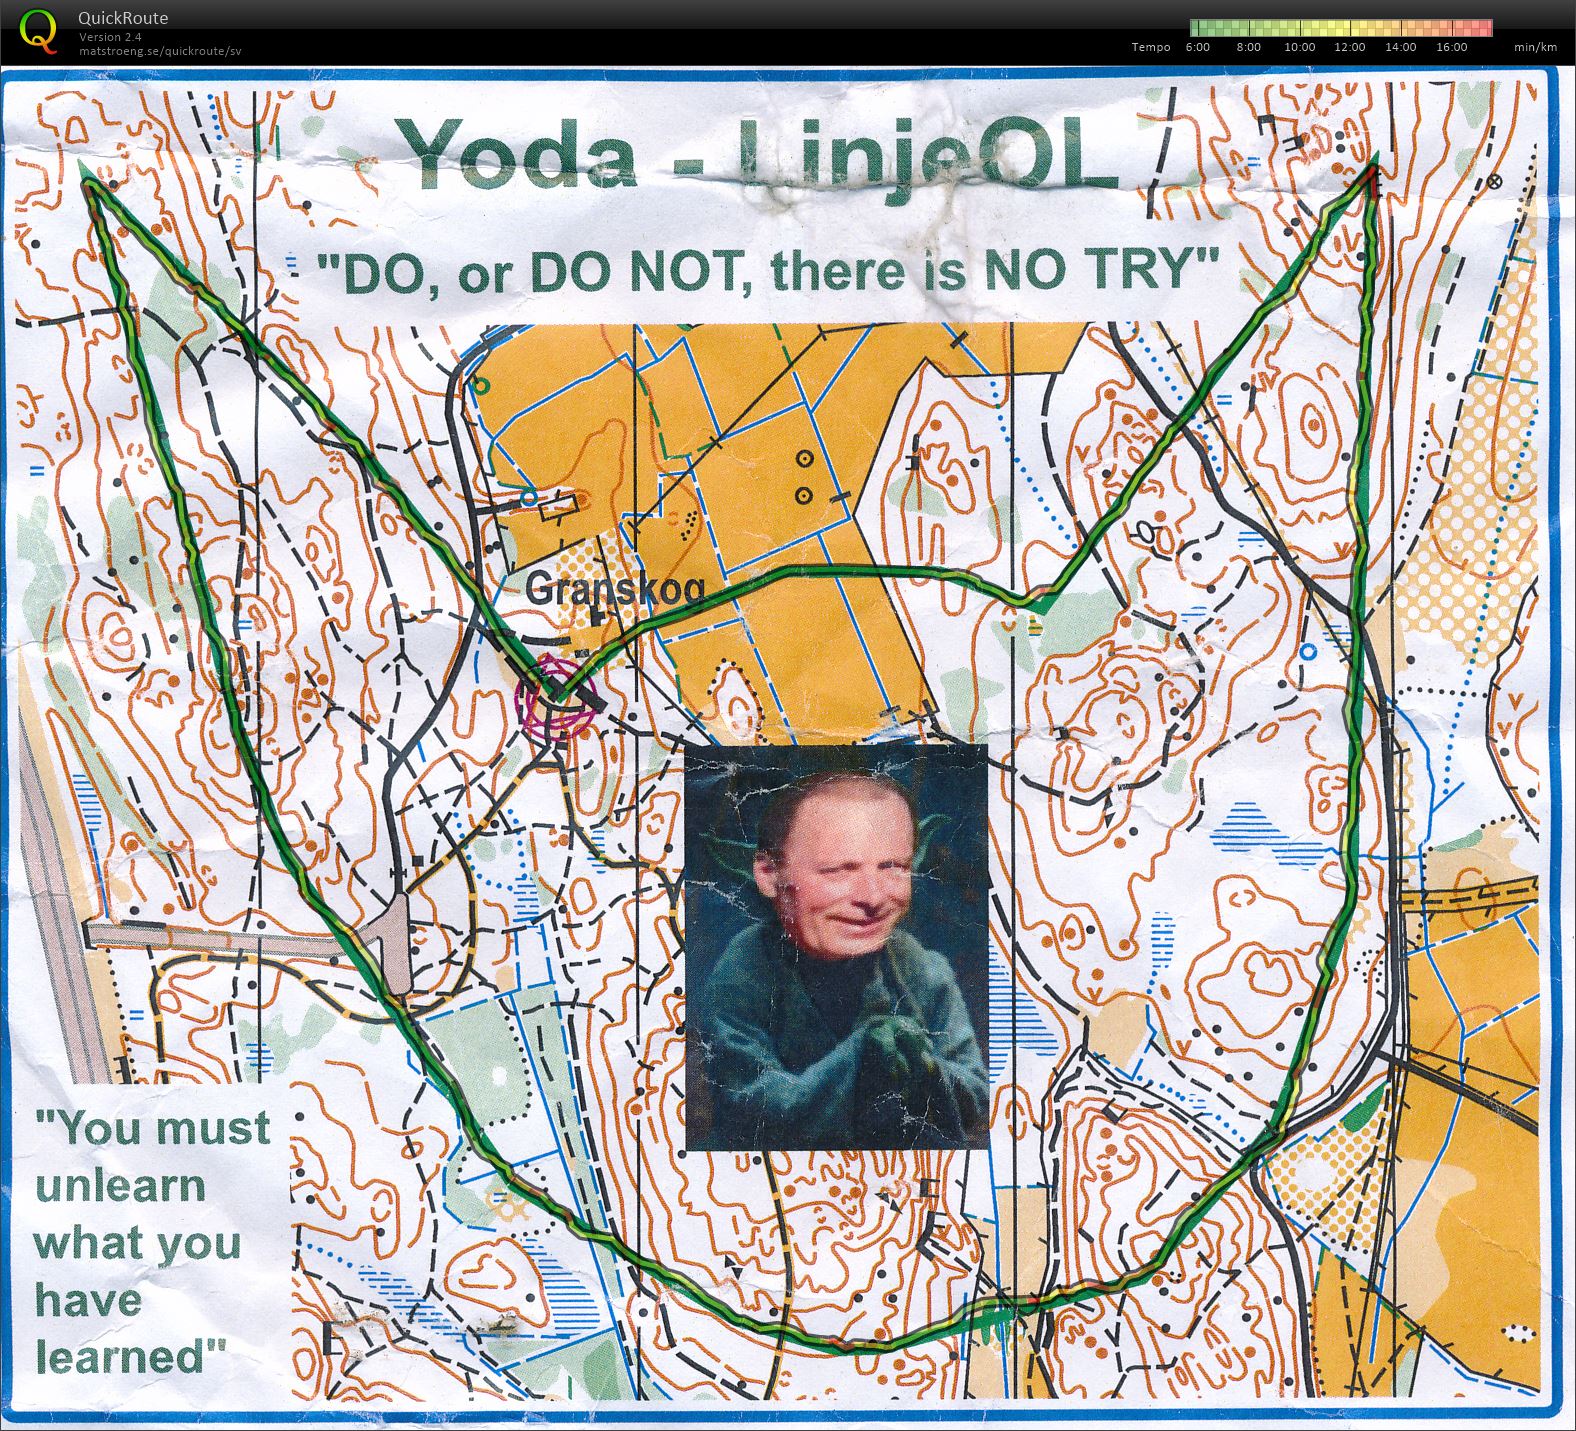 Yoda - linjeOL (18/06/2016)